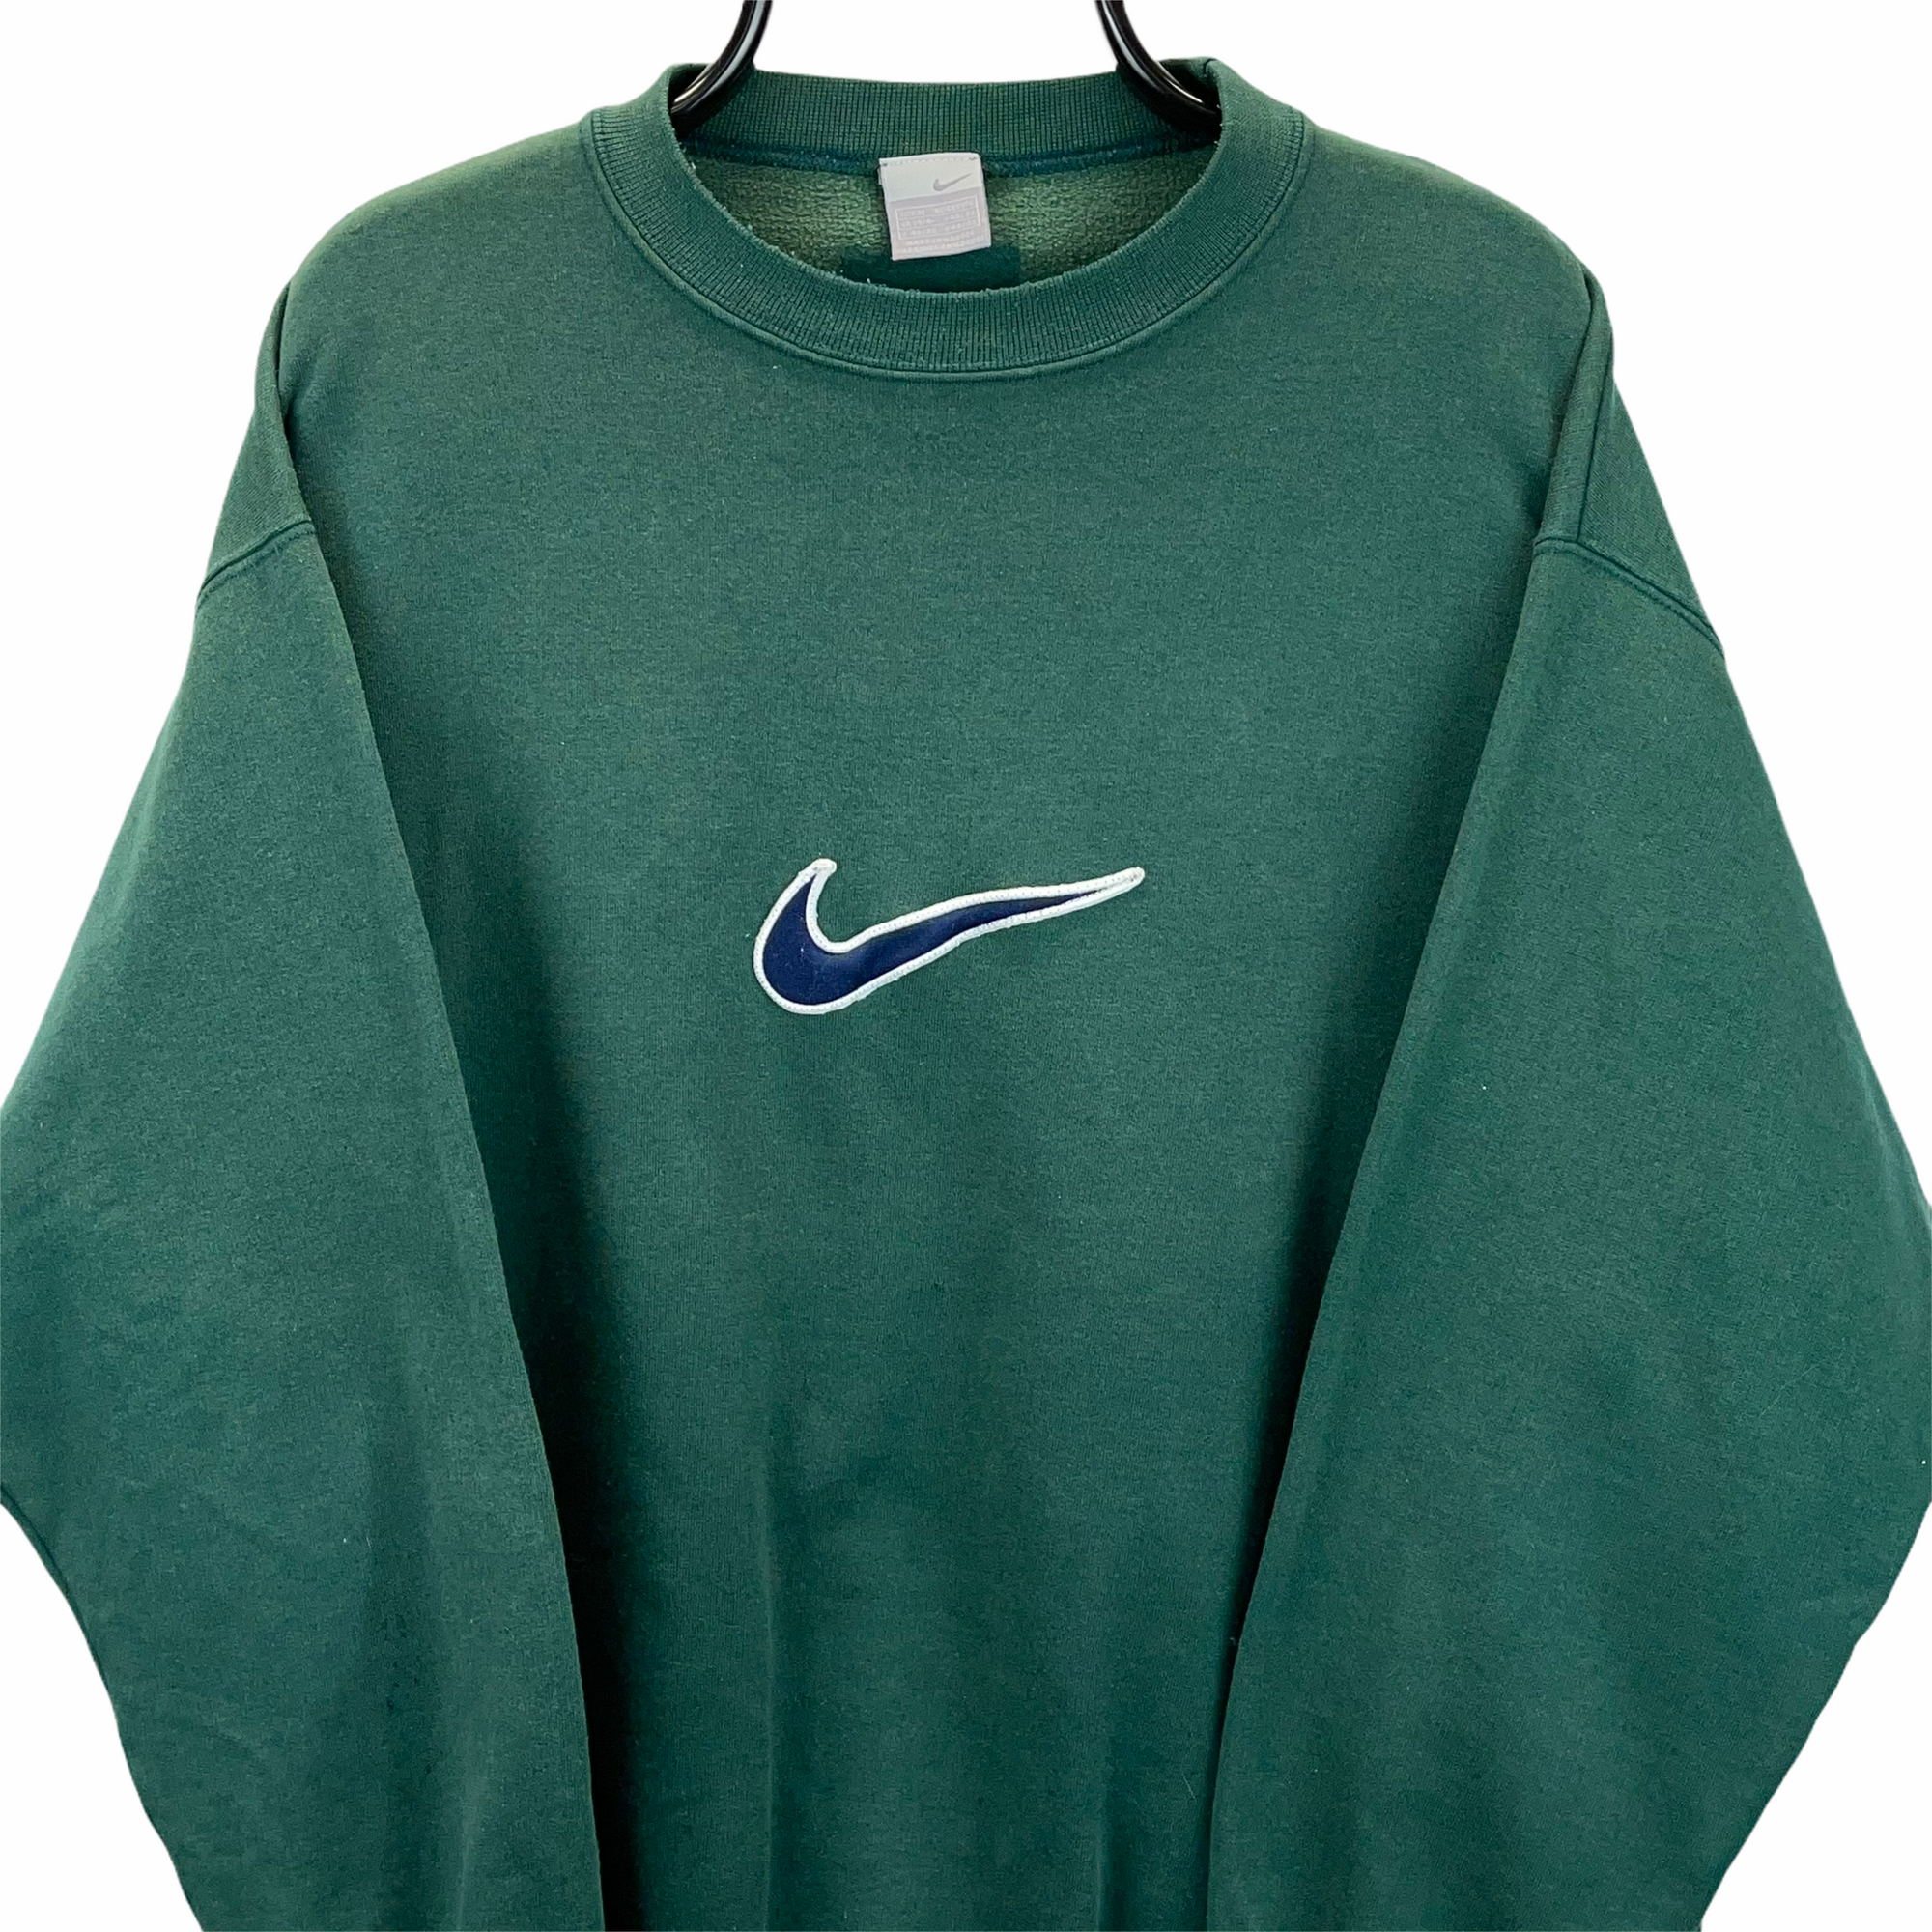 Vintage Nike Big Swoosh Sweatshirt in Forest Green - Men's XL/Women's XXL